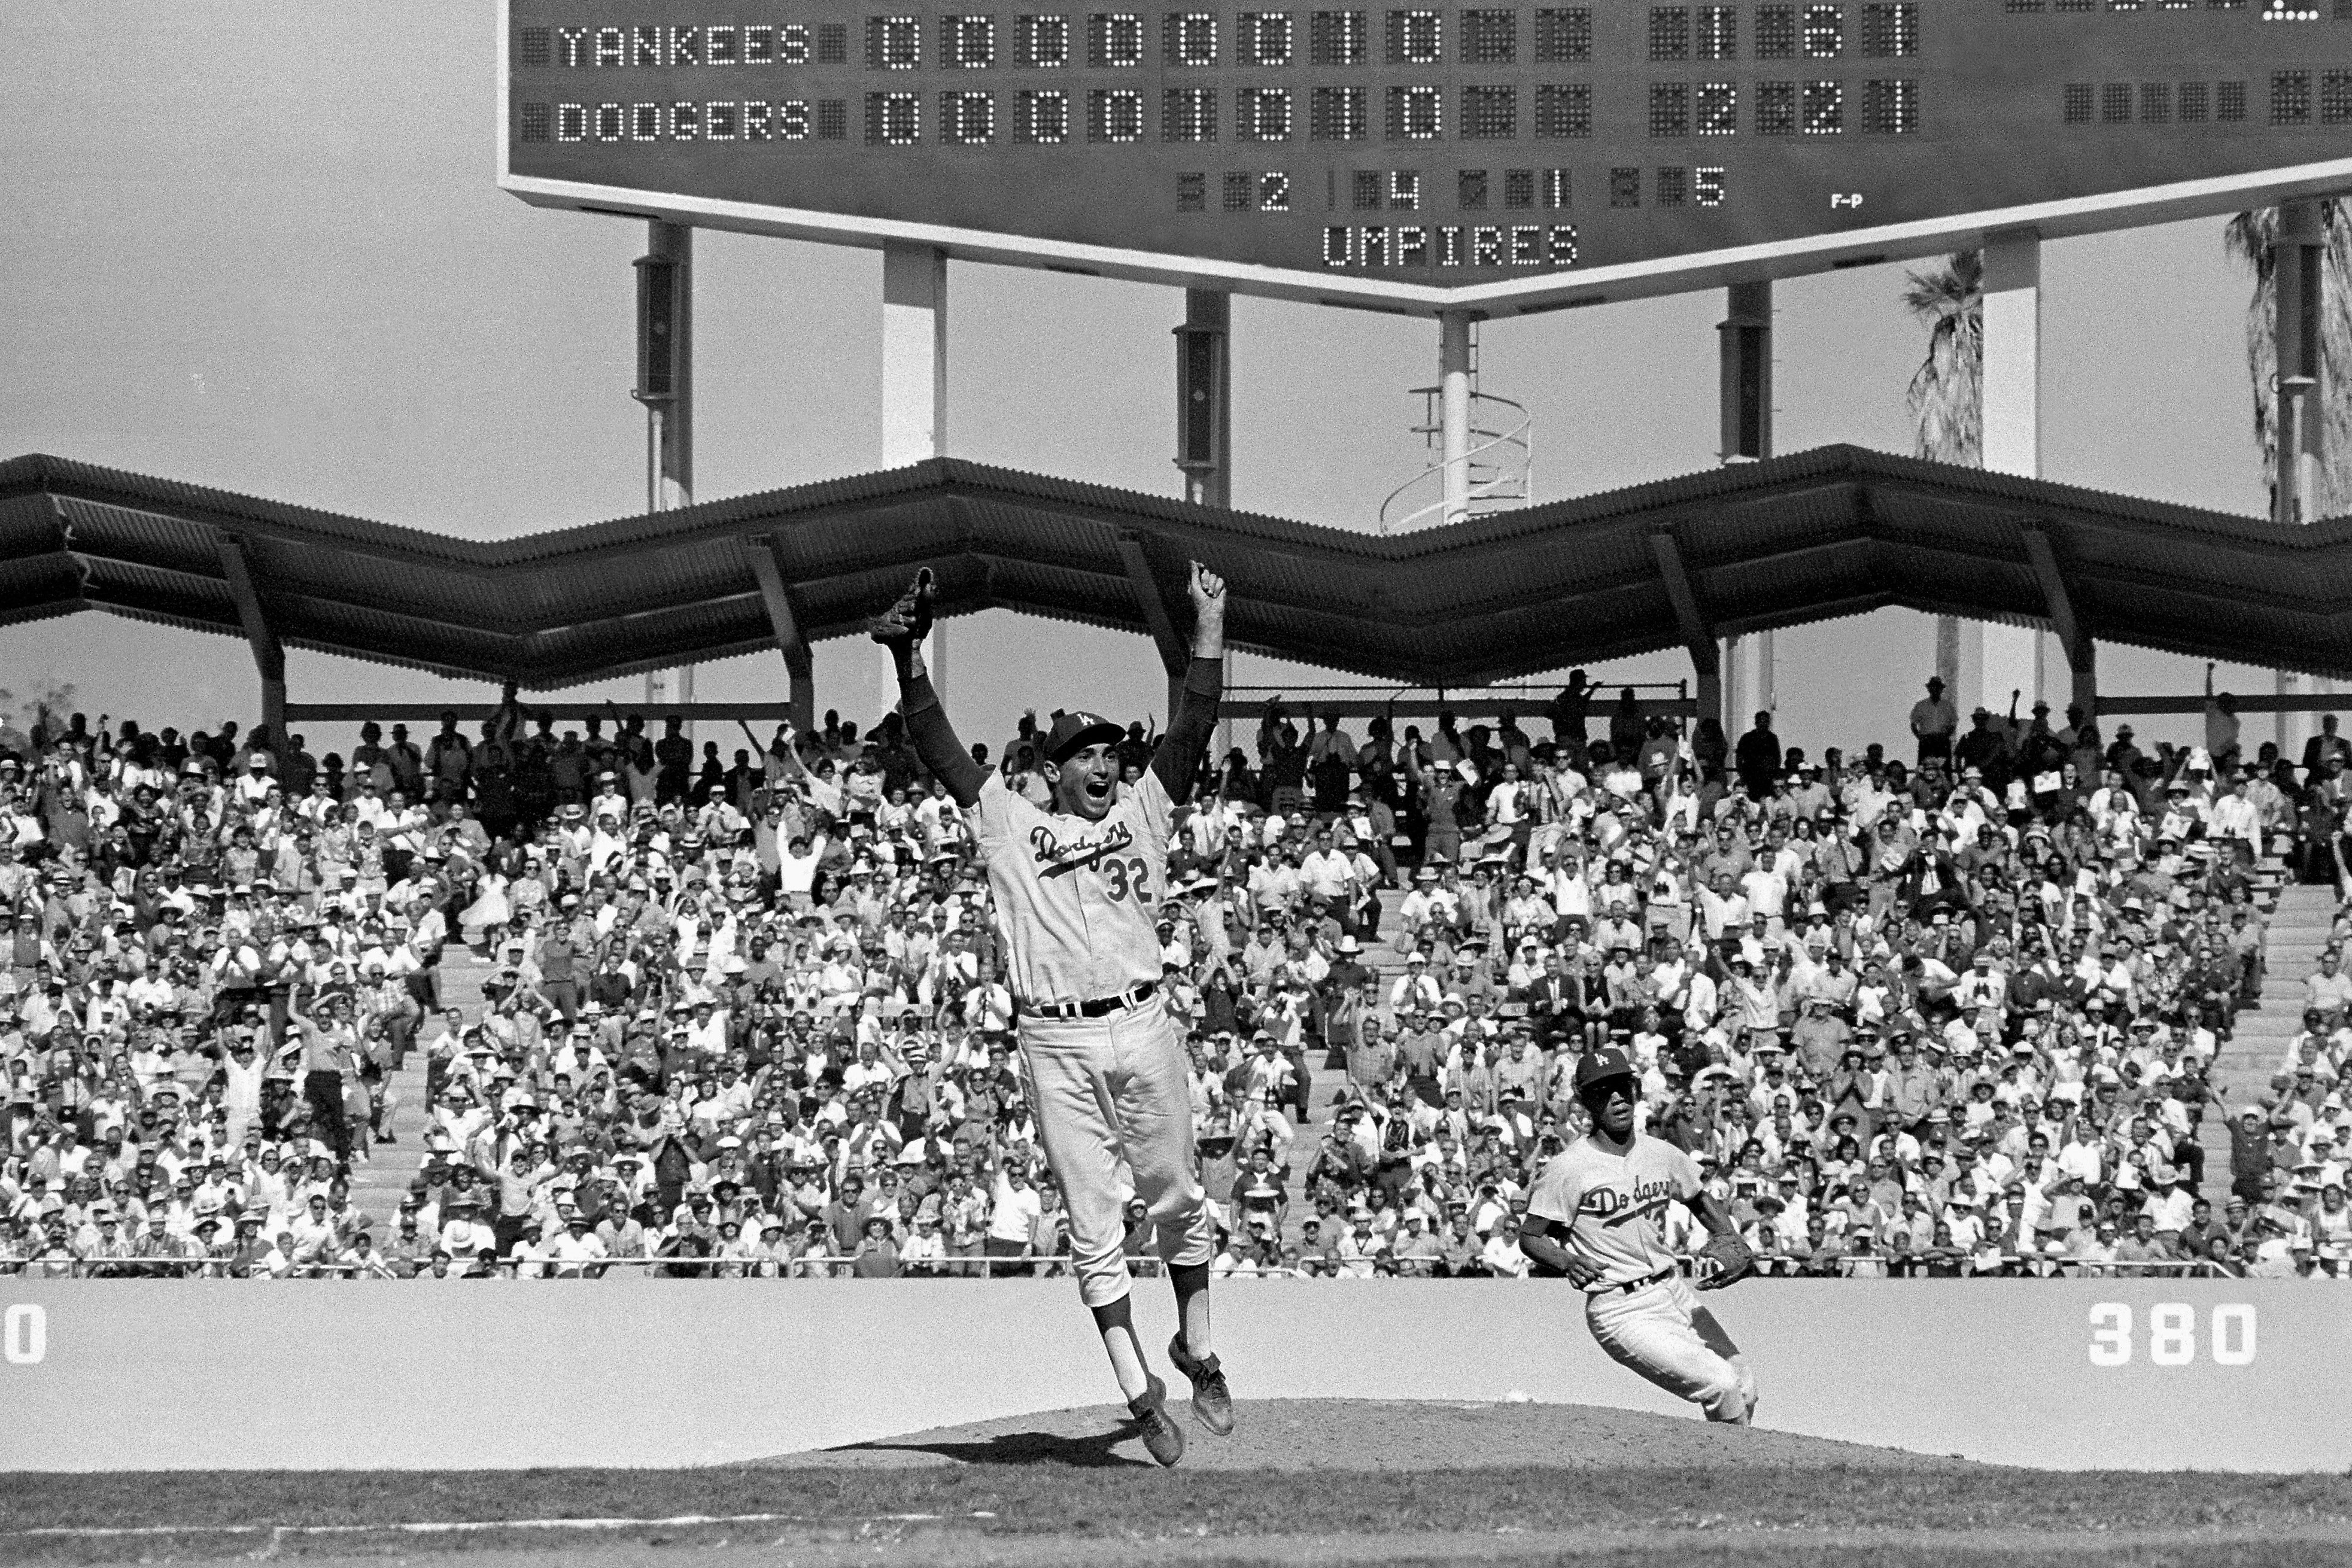 Sandy Koufax Pitching at Ebbets Field 1957 - Brooklyn NY — Old NYC Photos